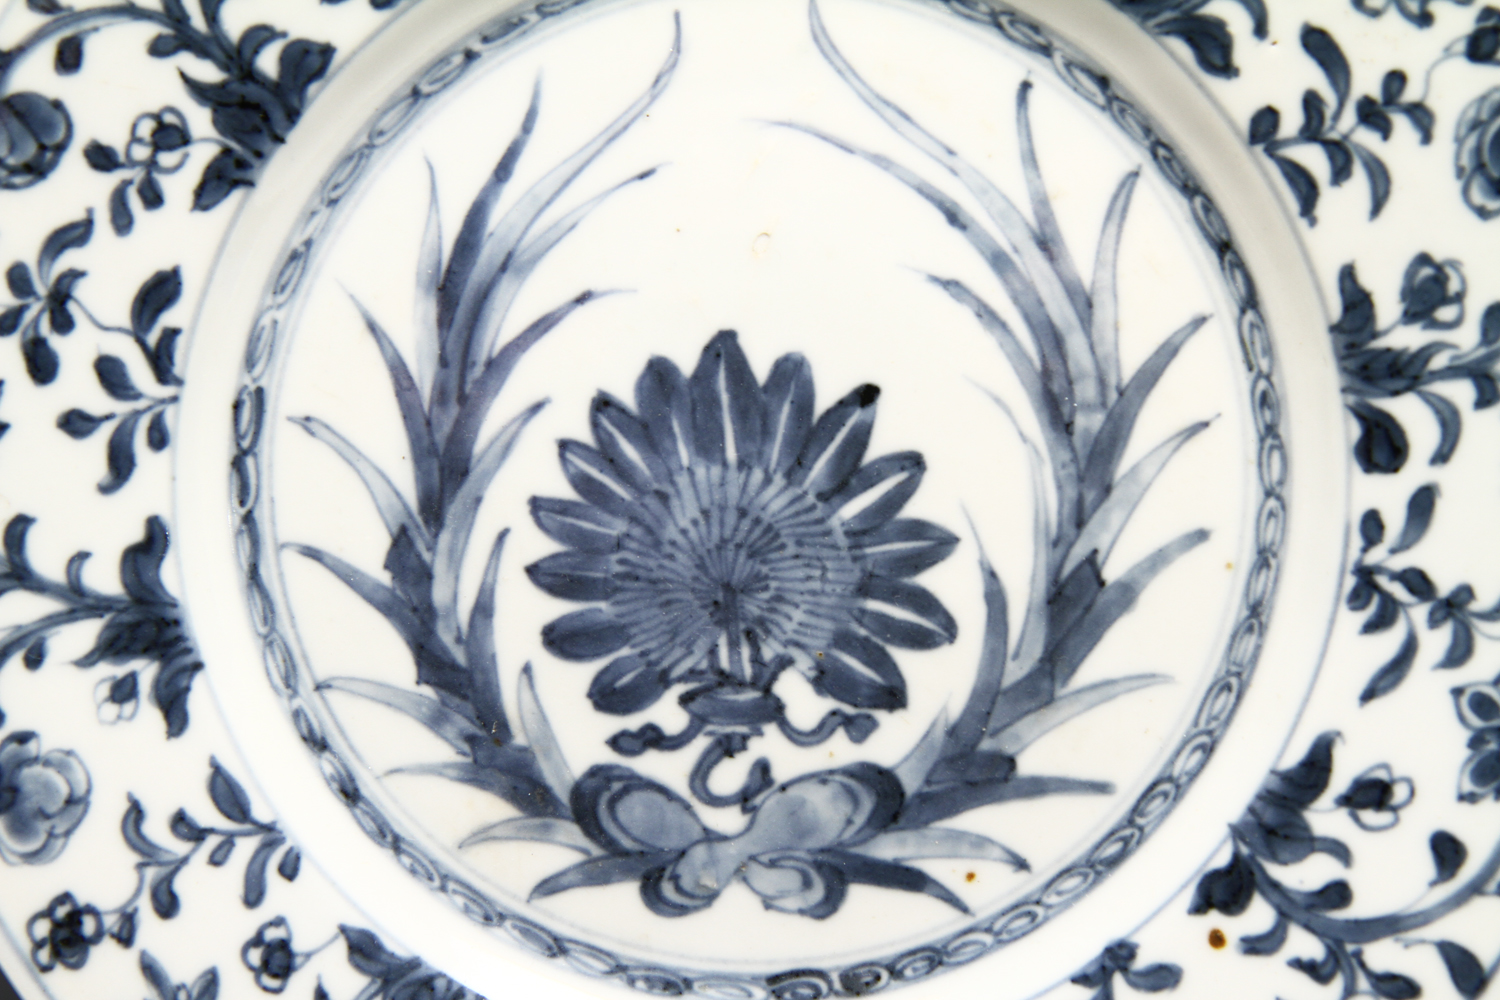 1137 - A Kangxi plate c 1700